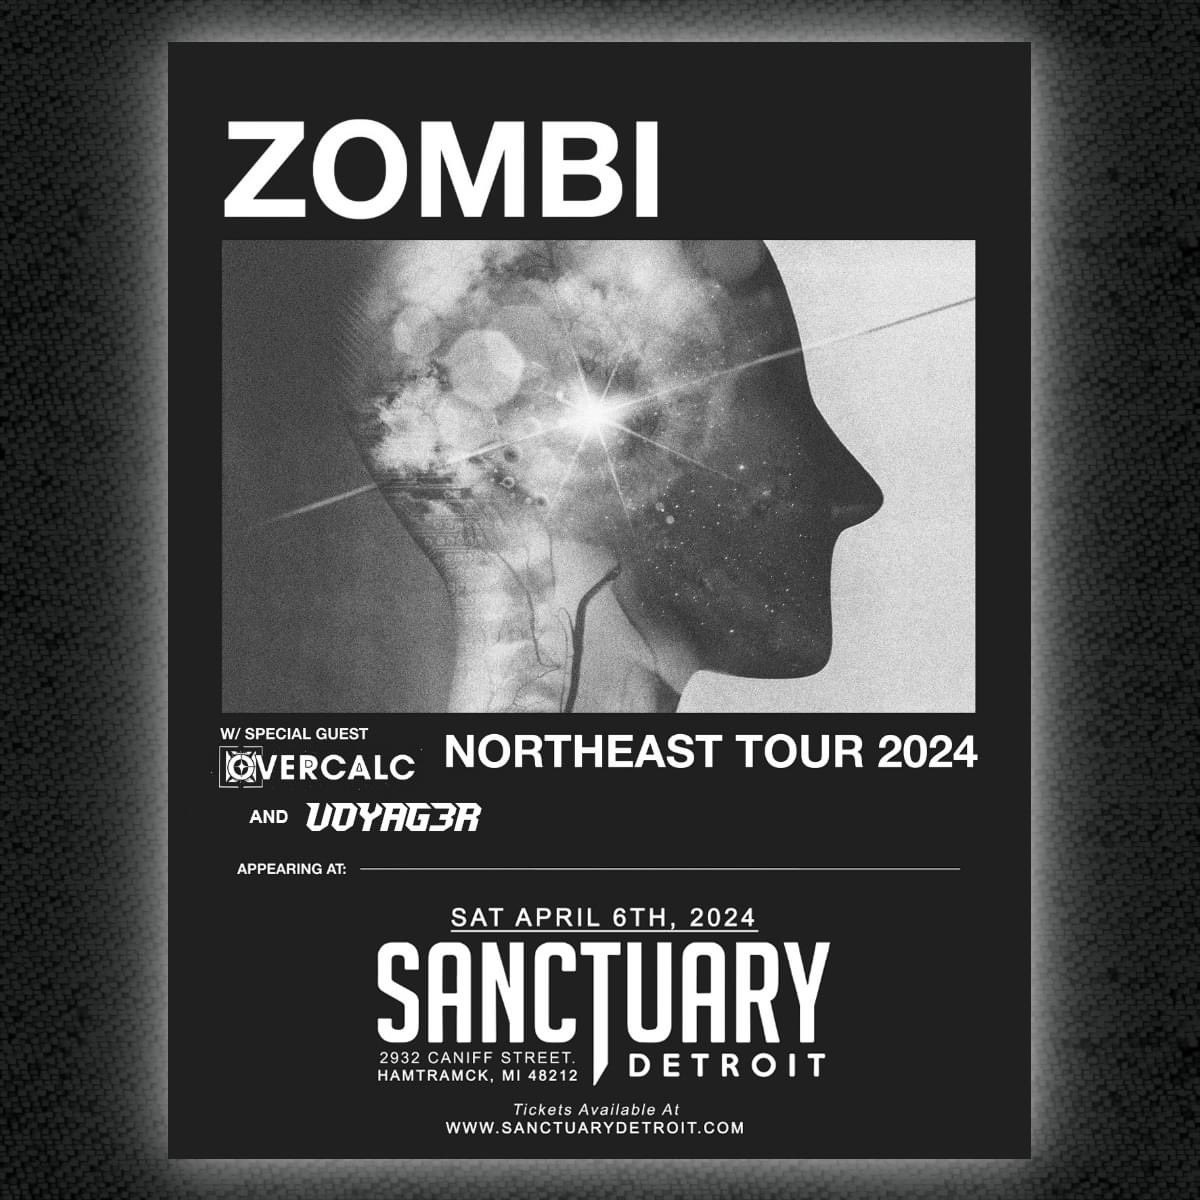 TONIGHT IS THE NIGHT - Detroit! Saturday, April 6 ZOMBI OVERCALC VOYAG3R @sanctuarydet Doors at 7pm Grab your tickets at sanctuarydetroit.com